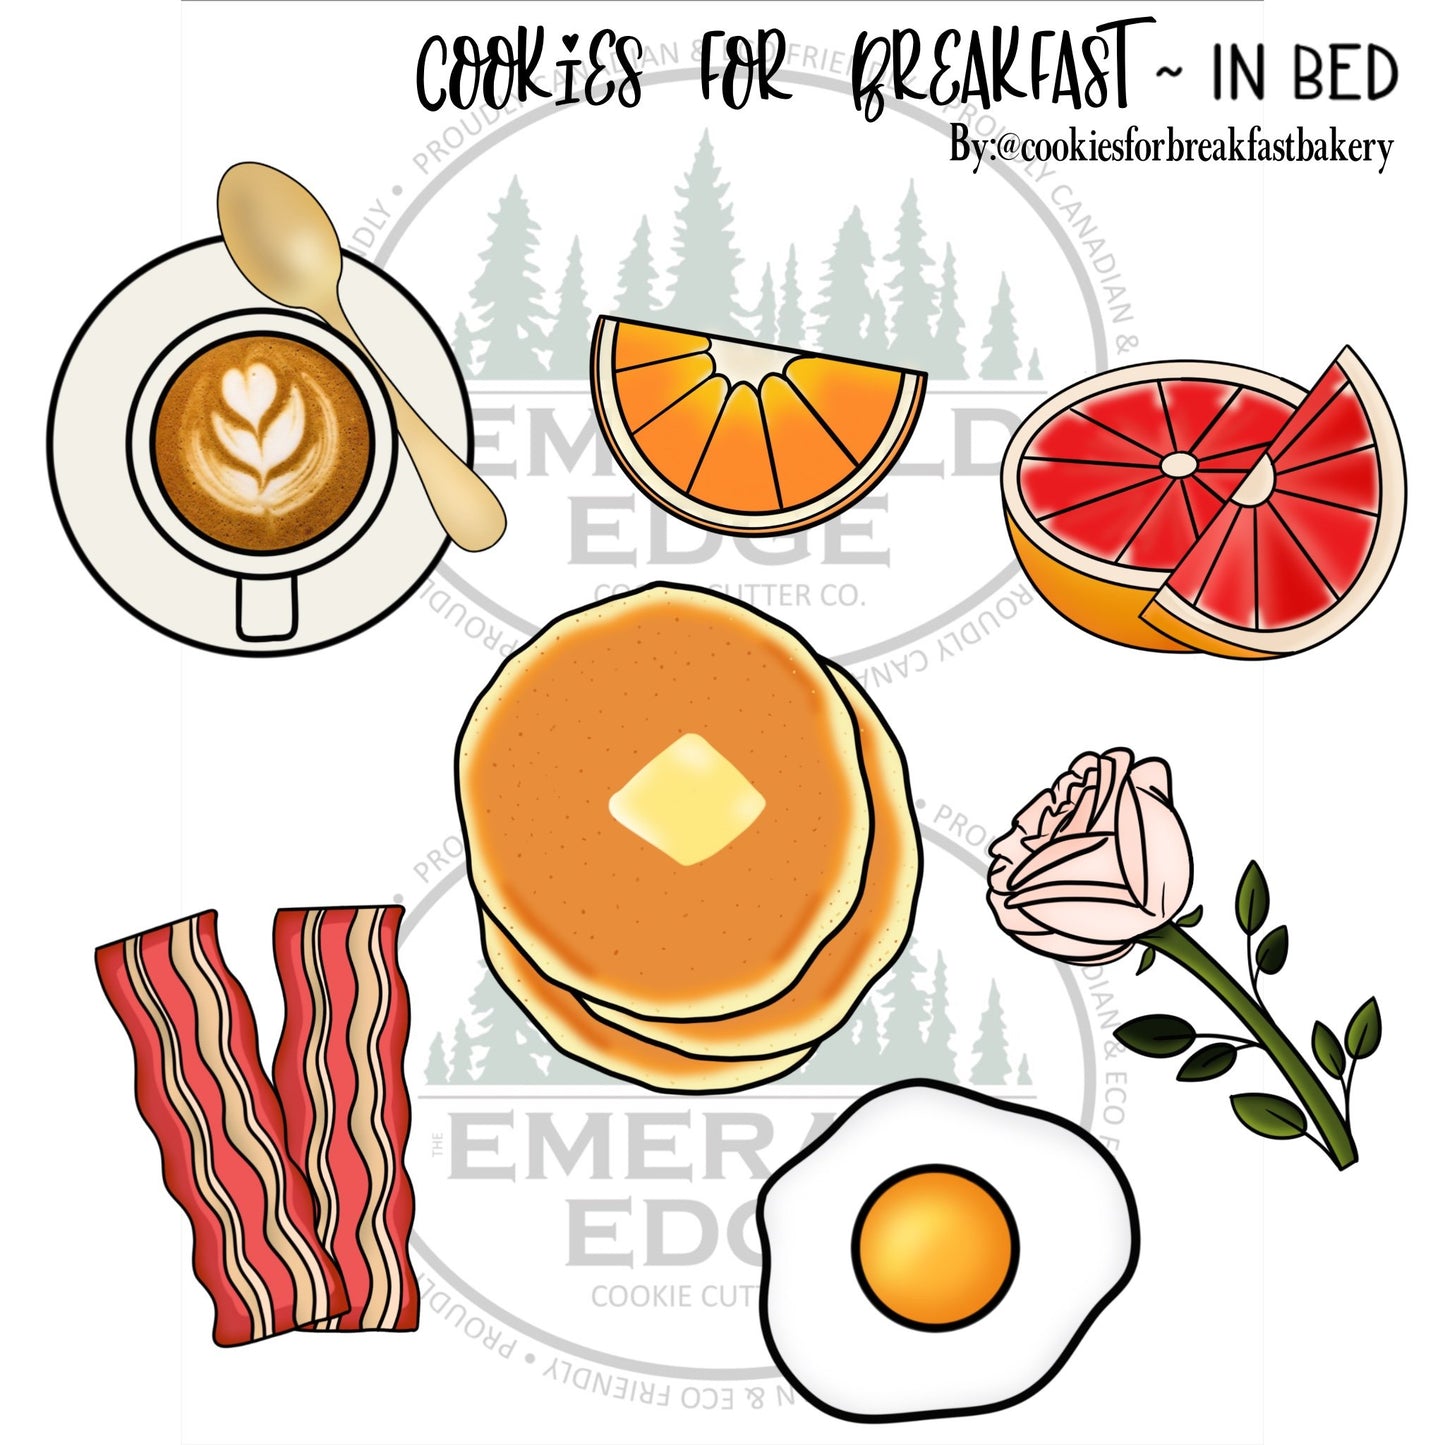 Cookies For Breakfast-In Bed ~ Egg